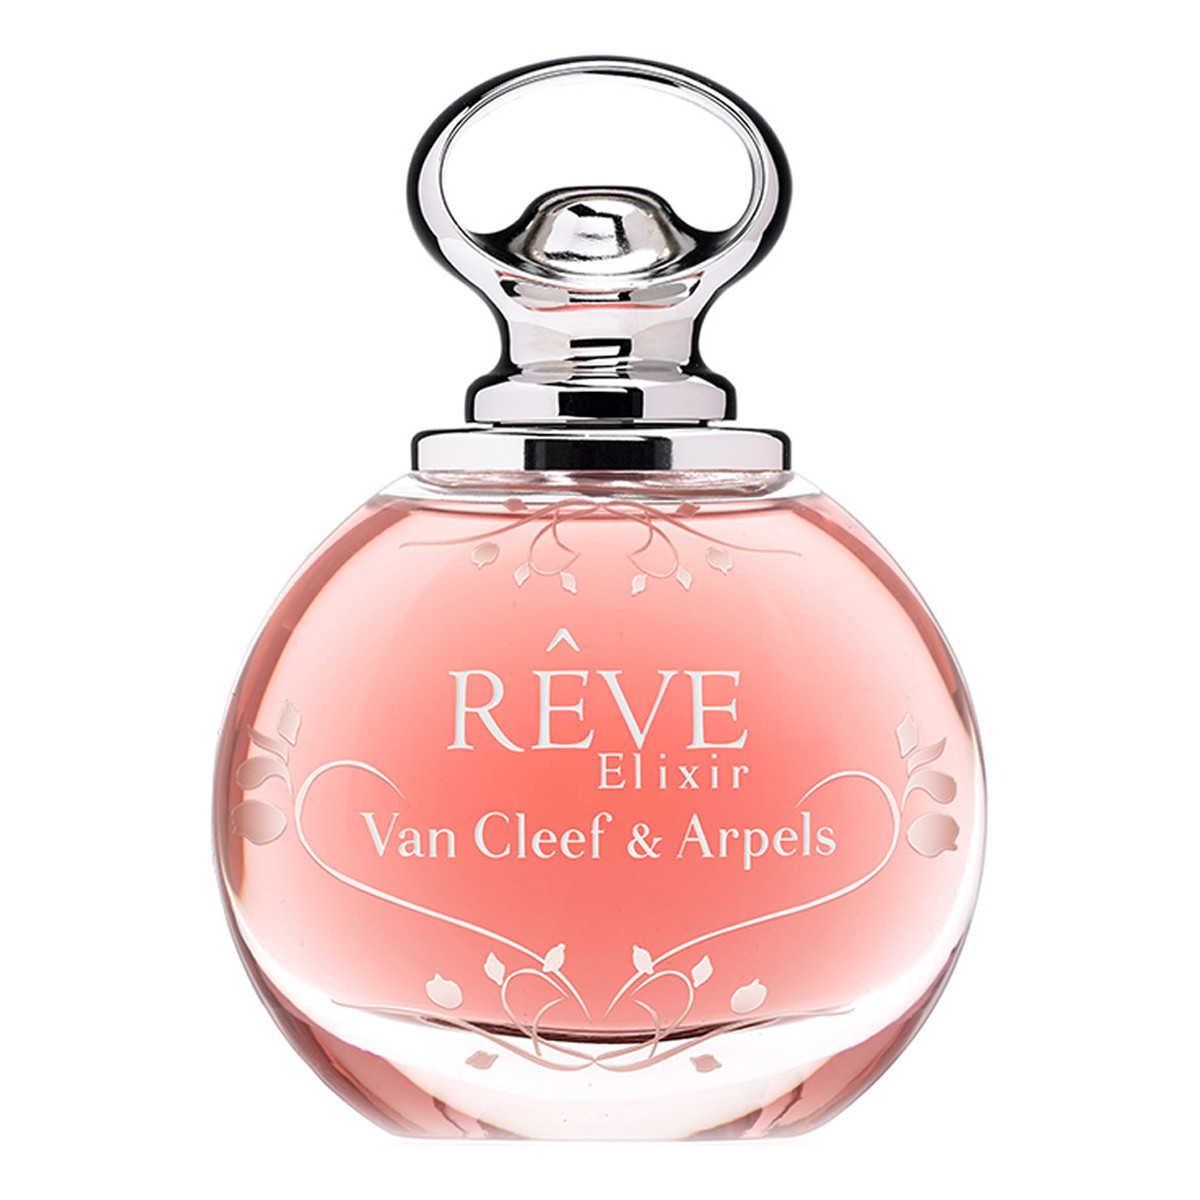 Van Cleef & Arpels Reve Elixir woda perfumowana 50ml